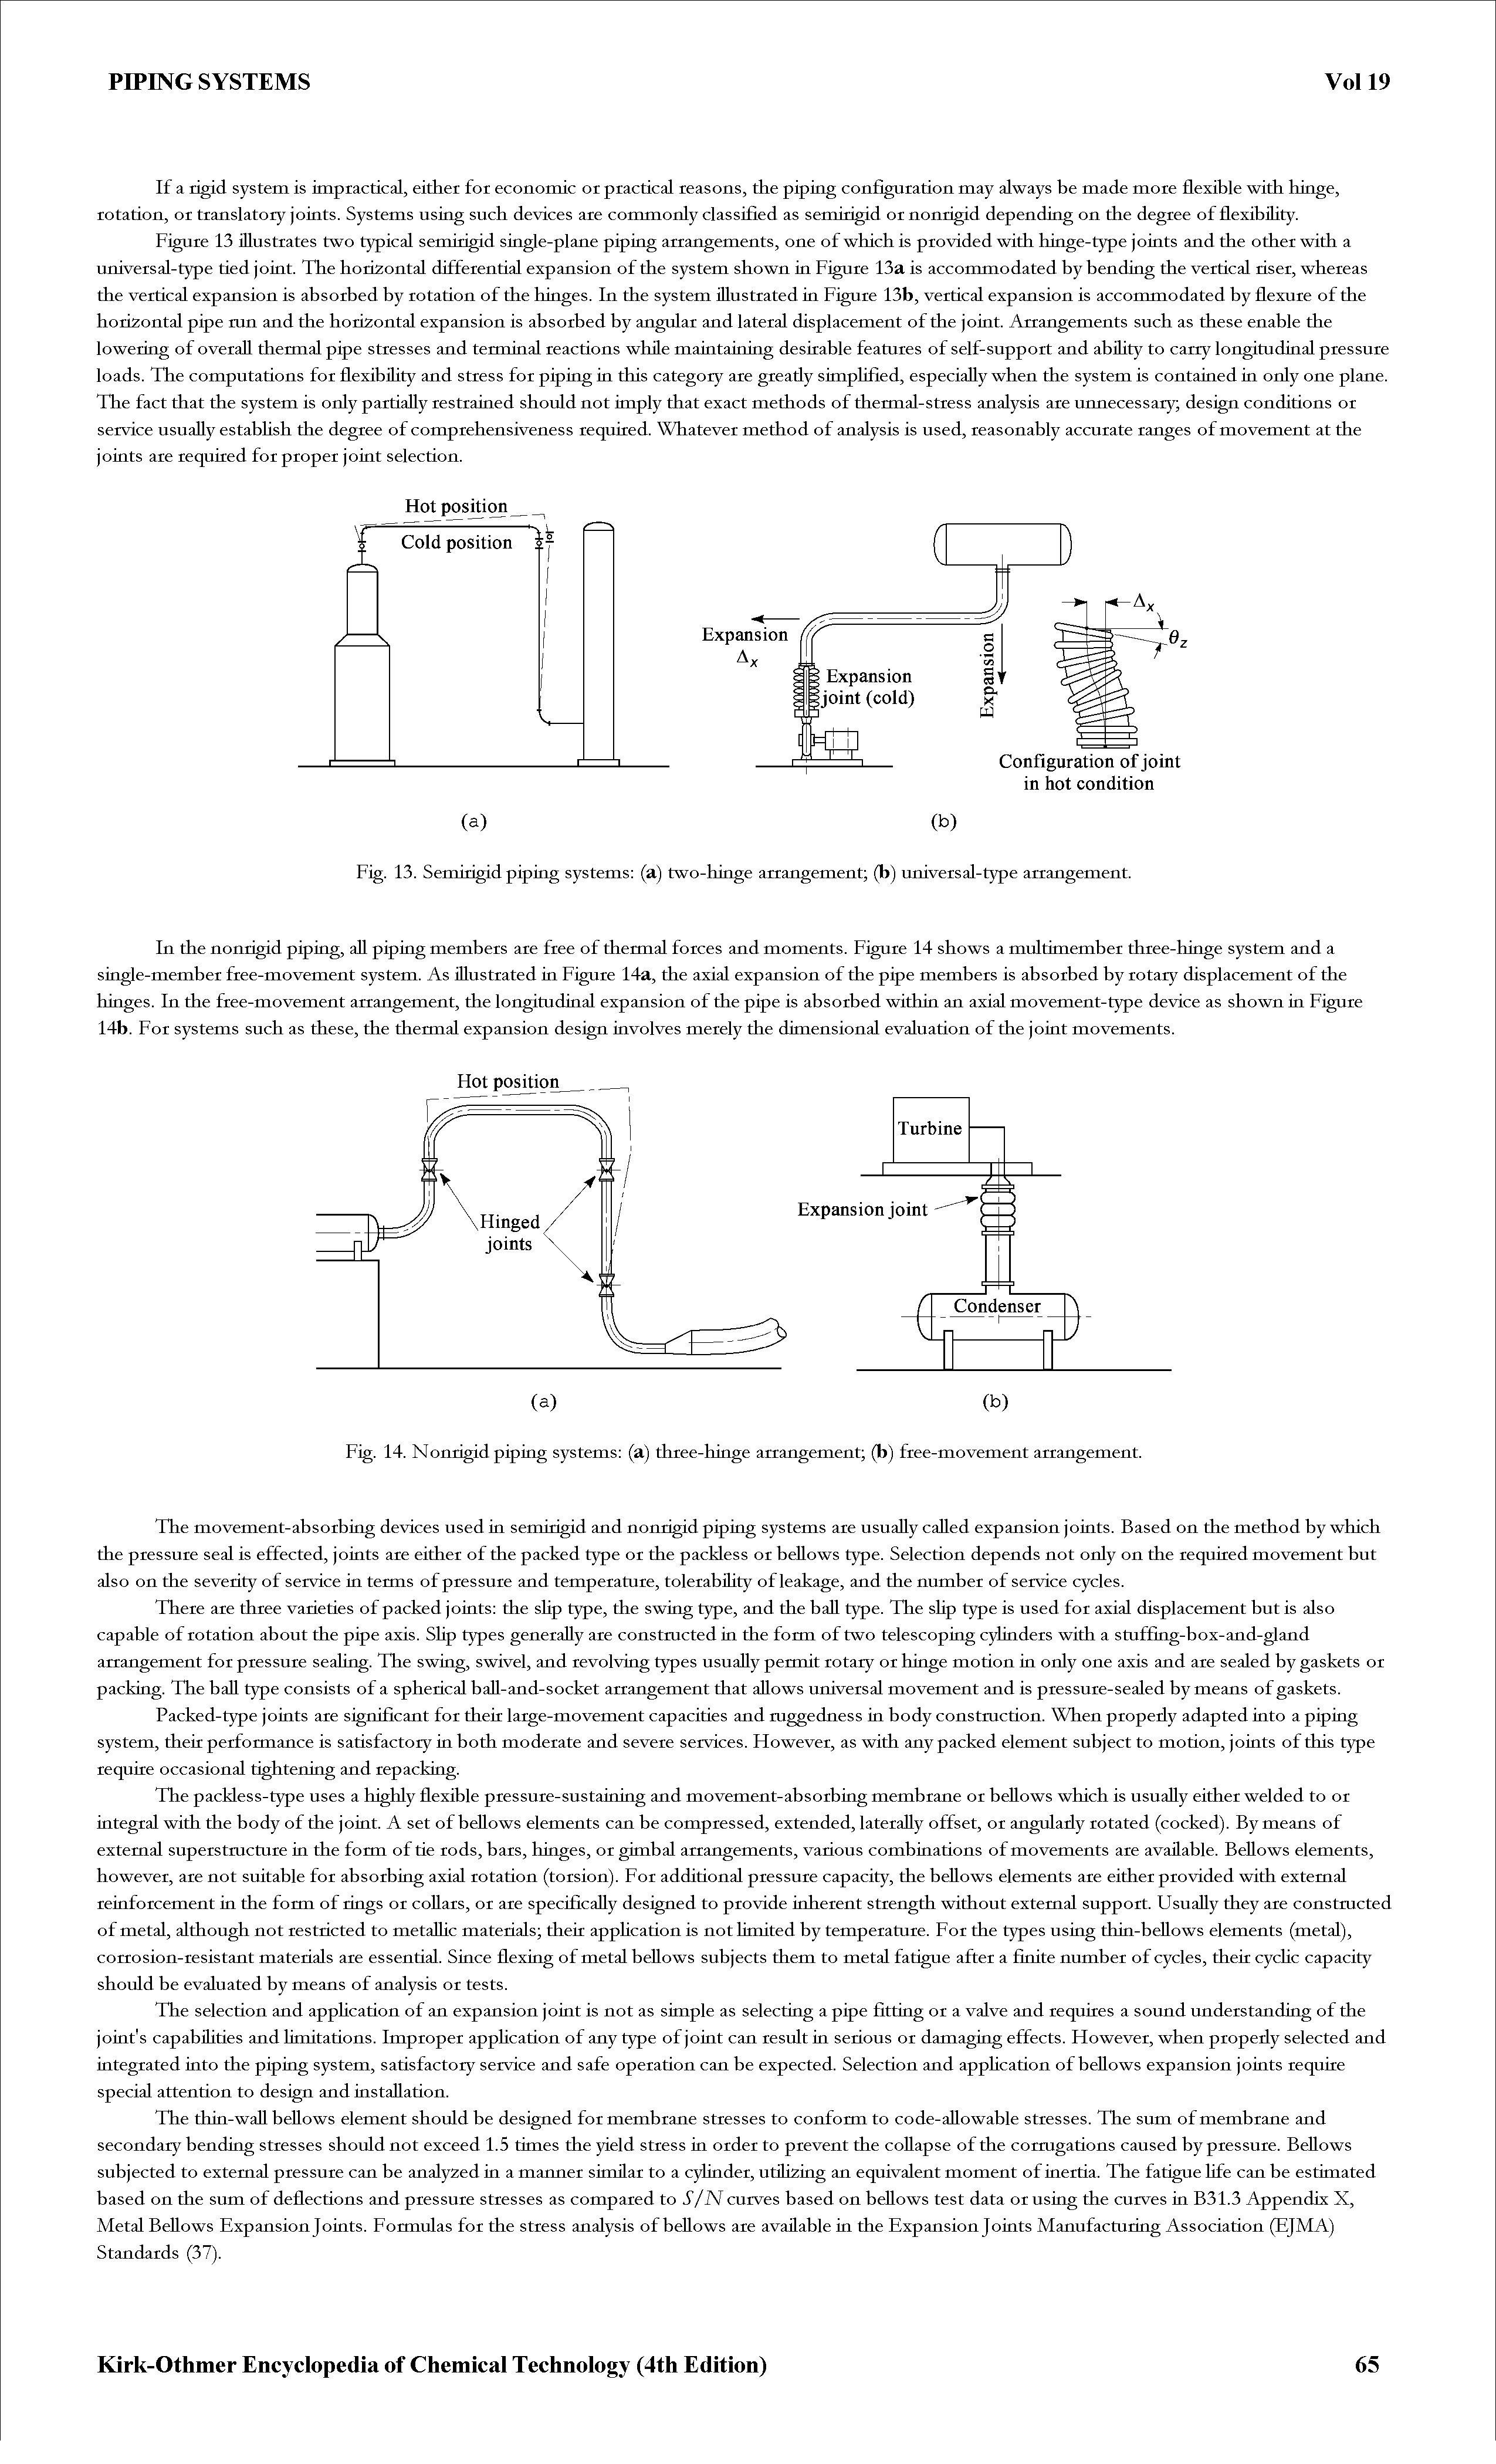 Fig. 14. Nonrigid piping systems (a) three-hinge arrangement (b) free-movement arrangement.